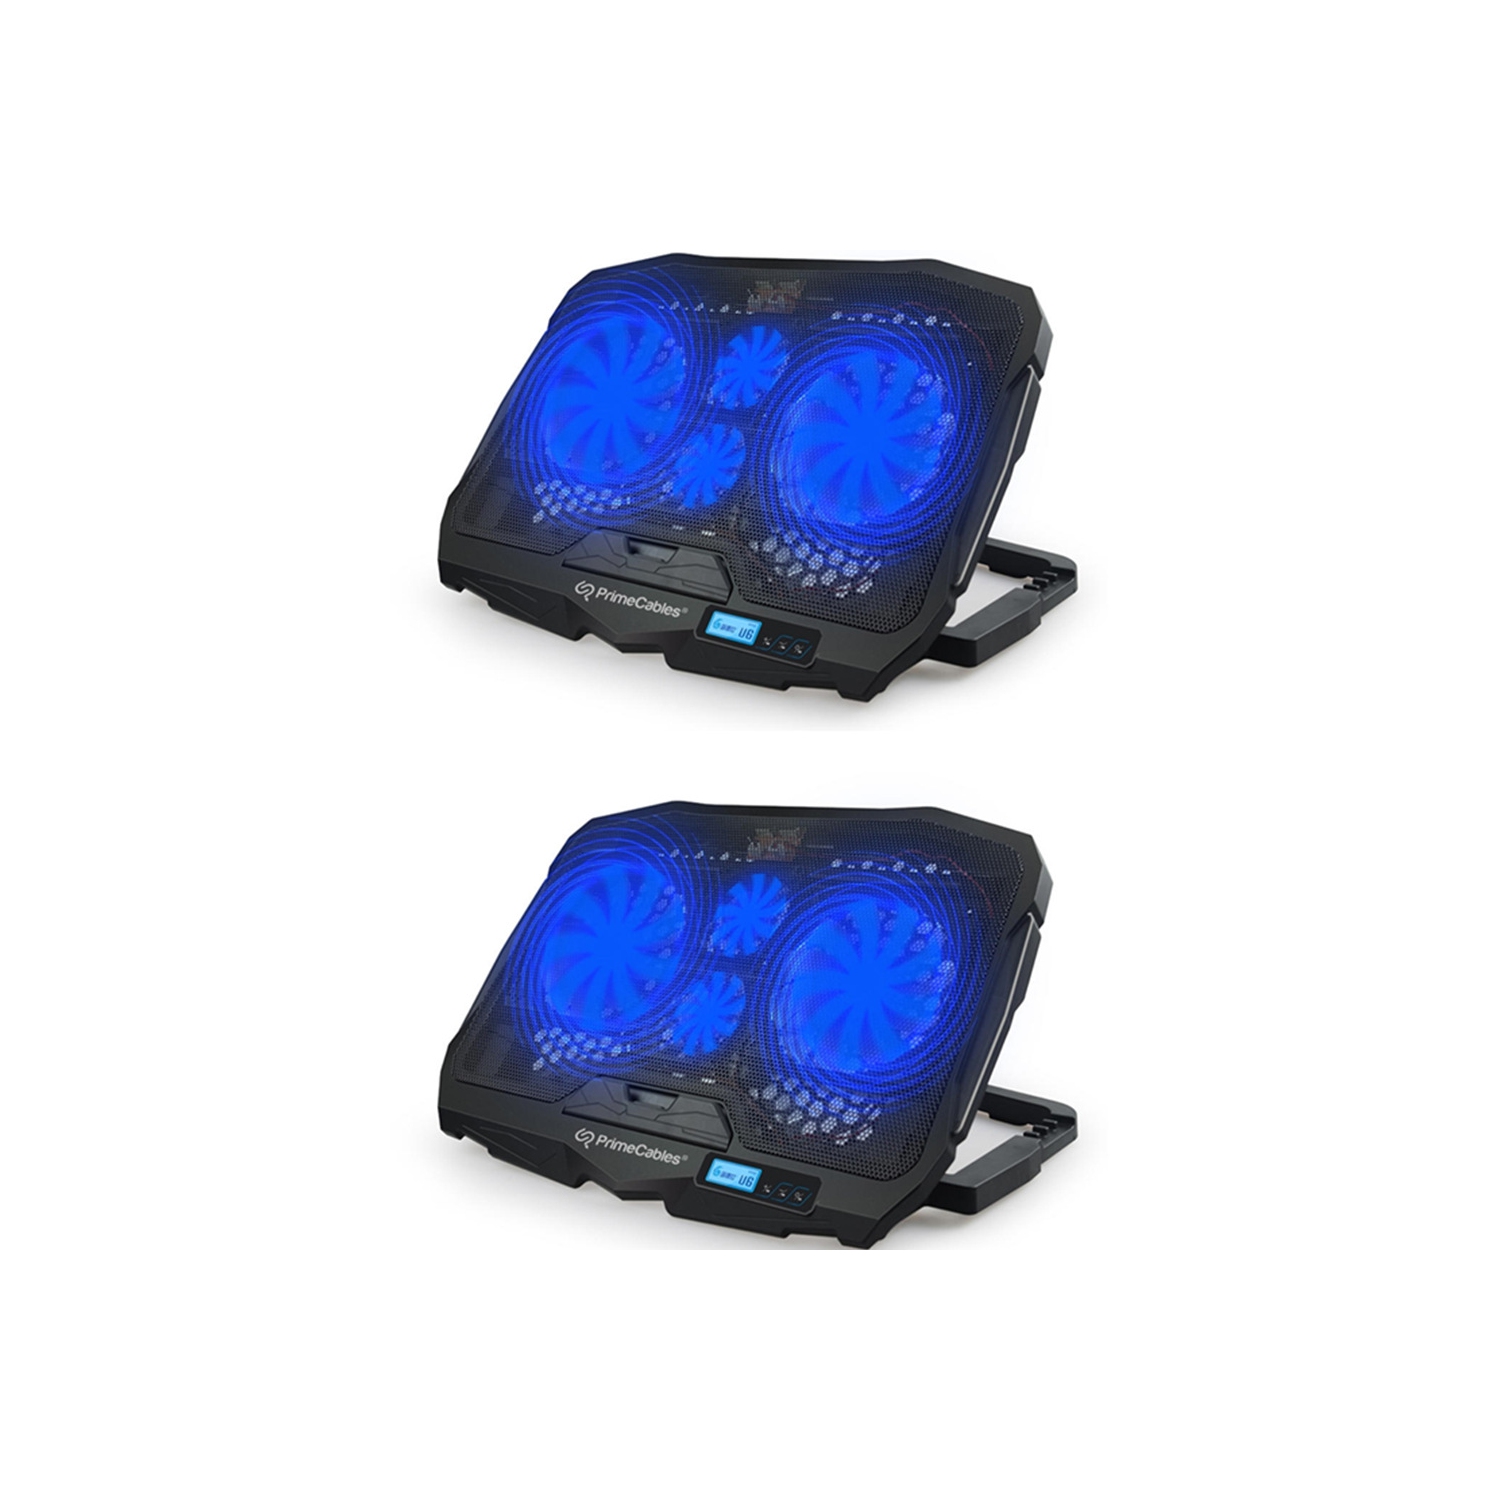 2 Packs USB Portable Height Adjustable Laptop Cooler with LED Cooler Fans, blue - PrimeCables